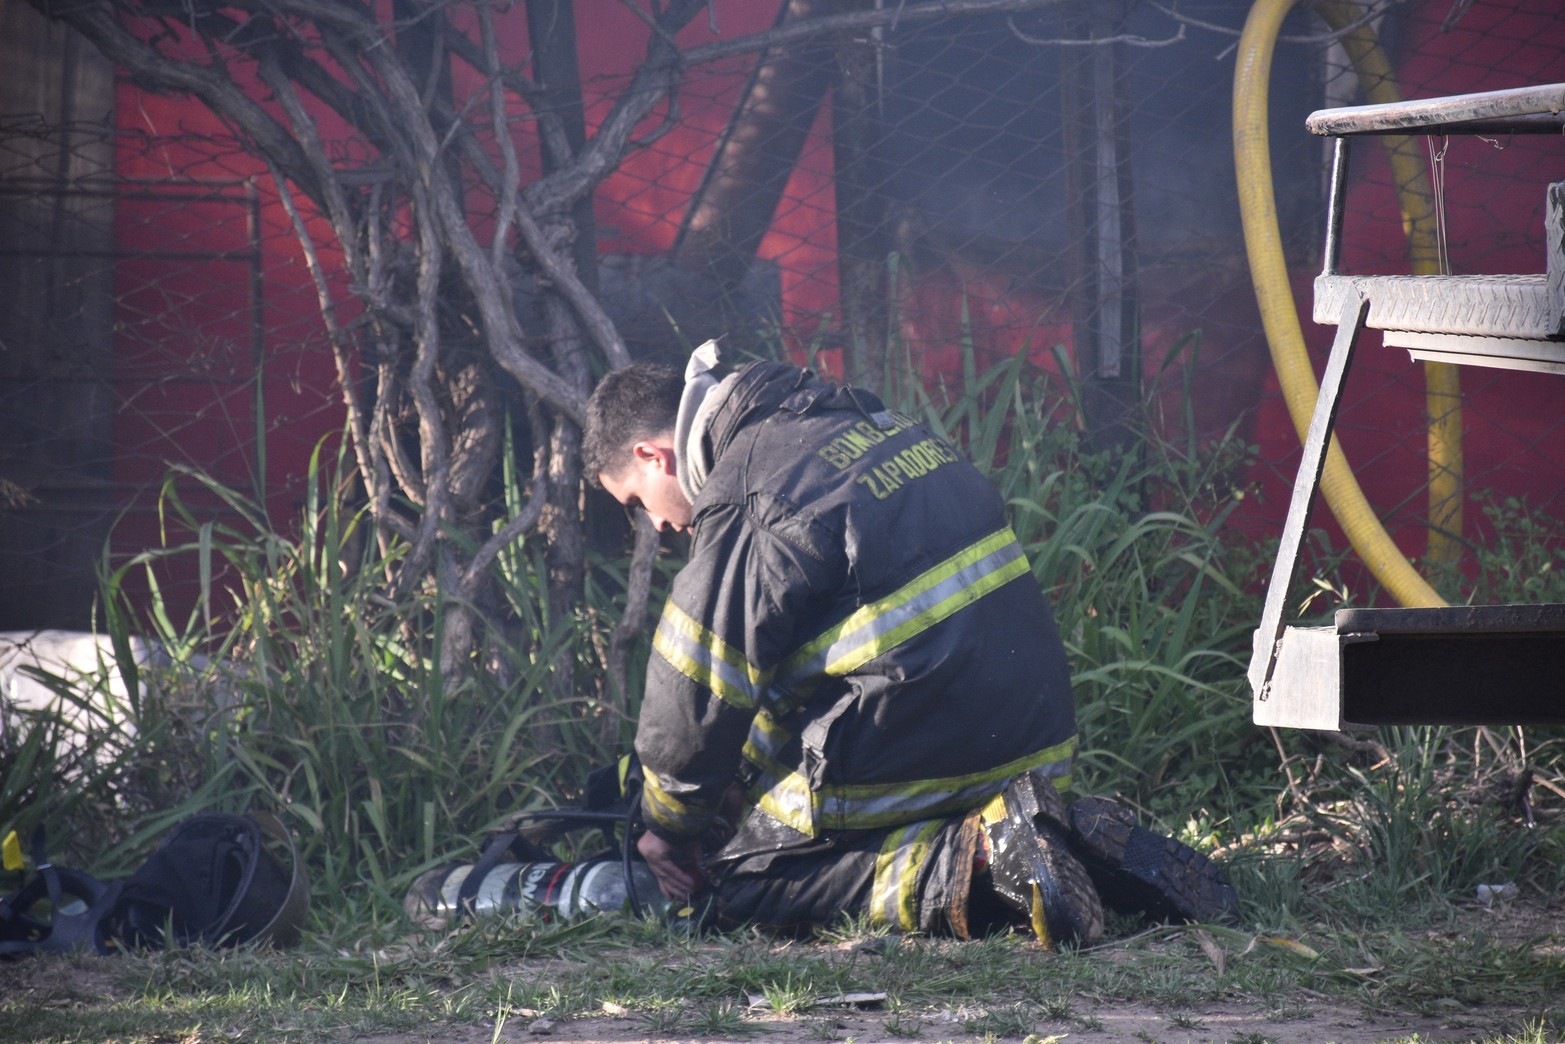 Incendio gabín ferroviario en Avellaneda 4800. Bomberos trabajan en el lugar. Foto Flavio Raina